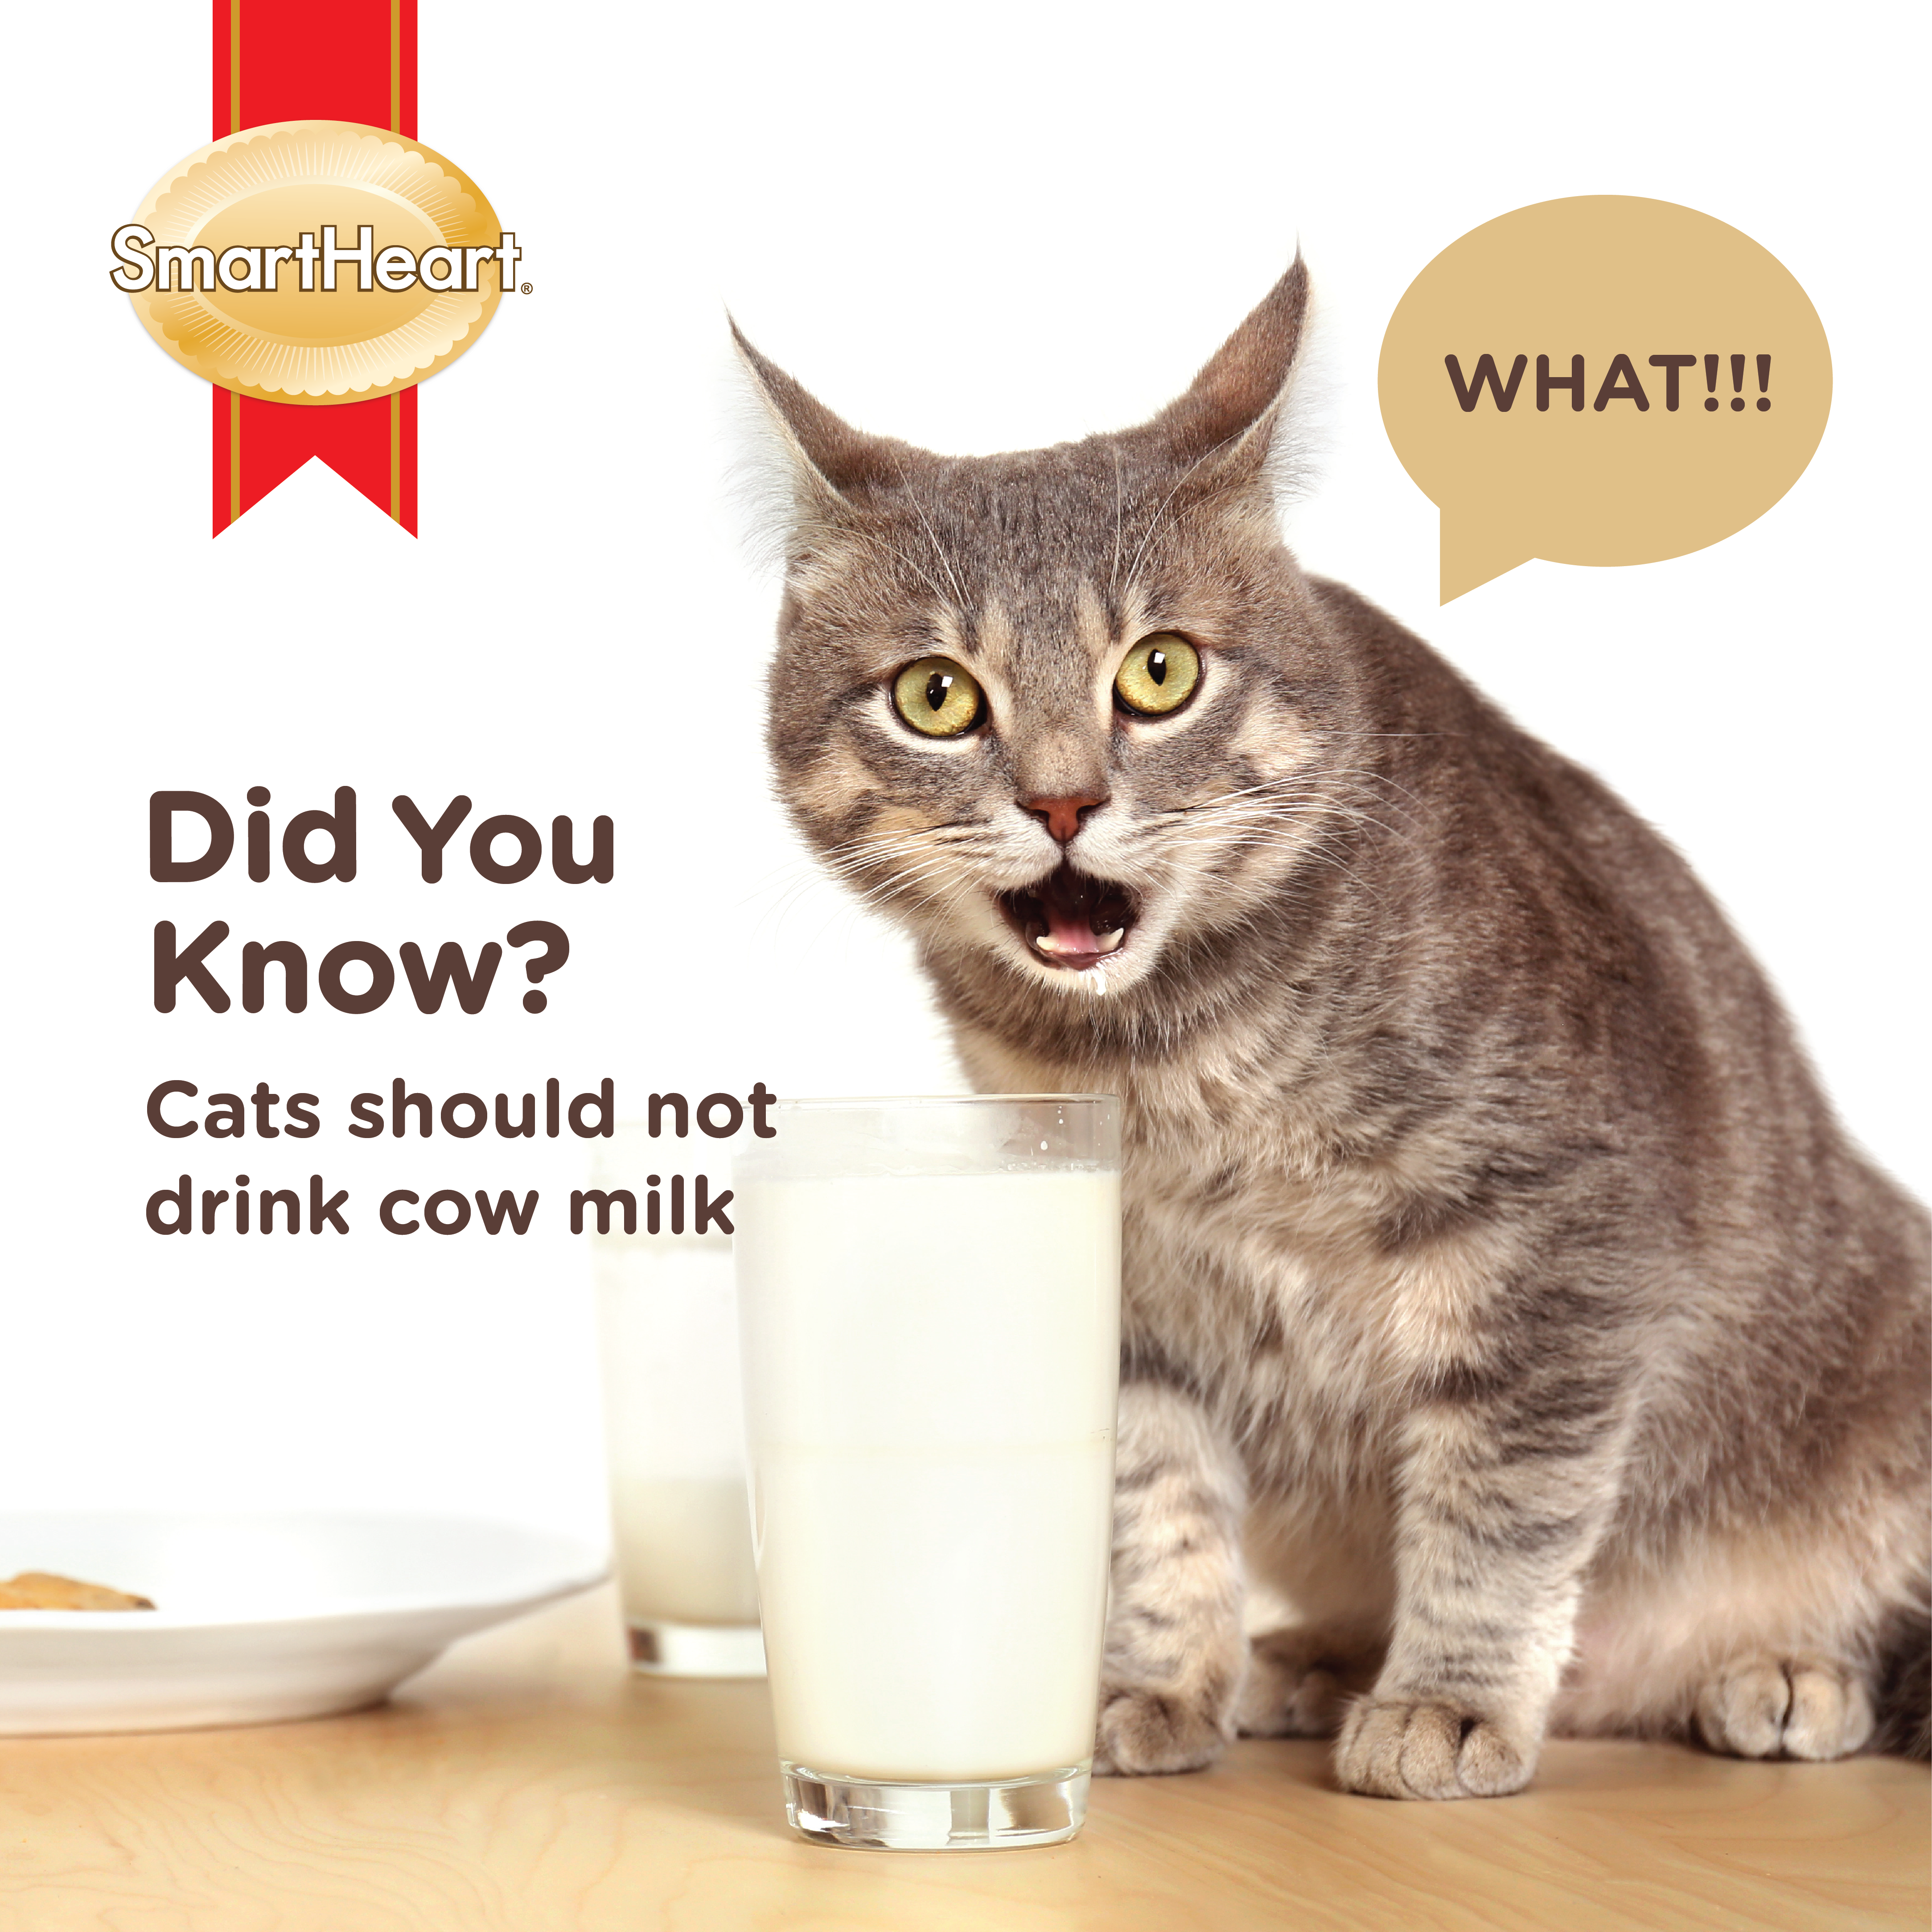 Cats should not drink cow milk